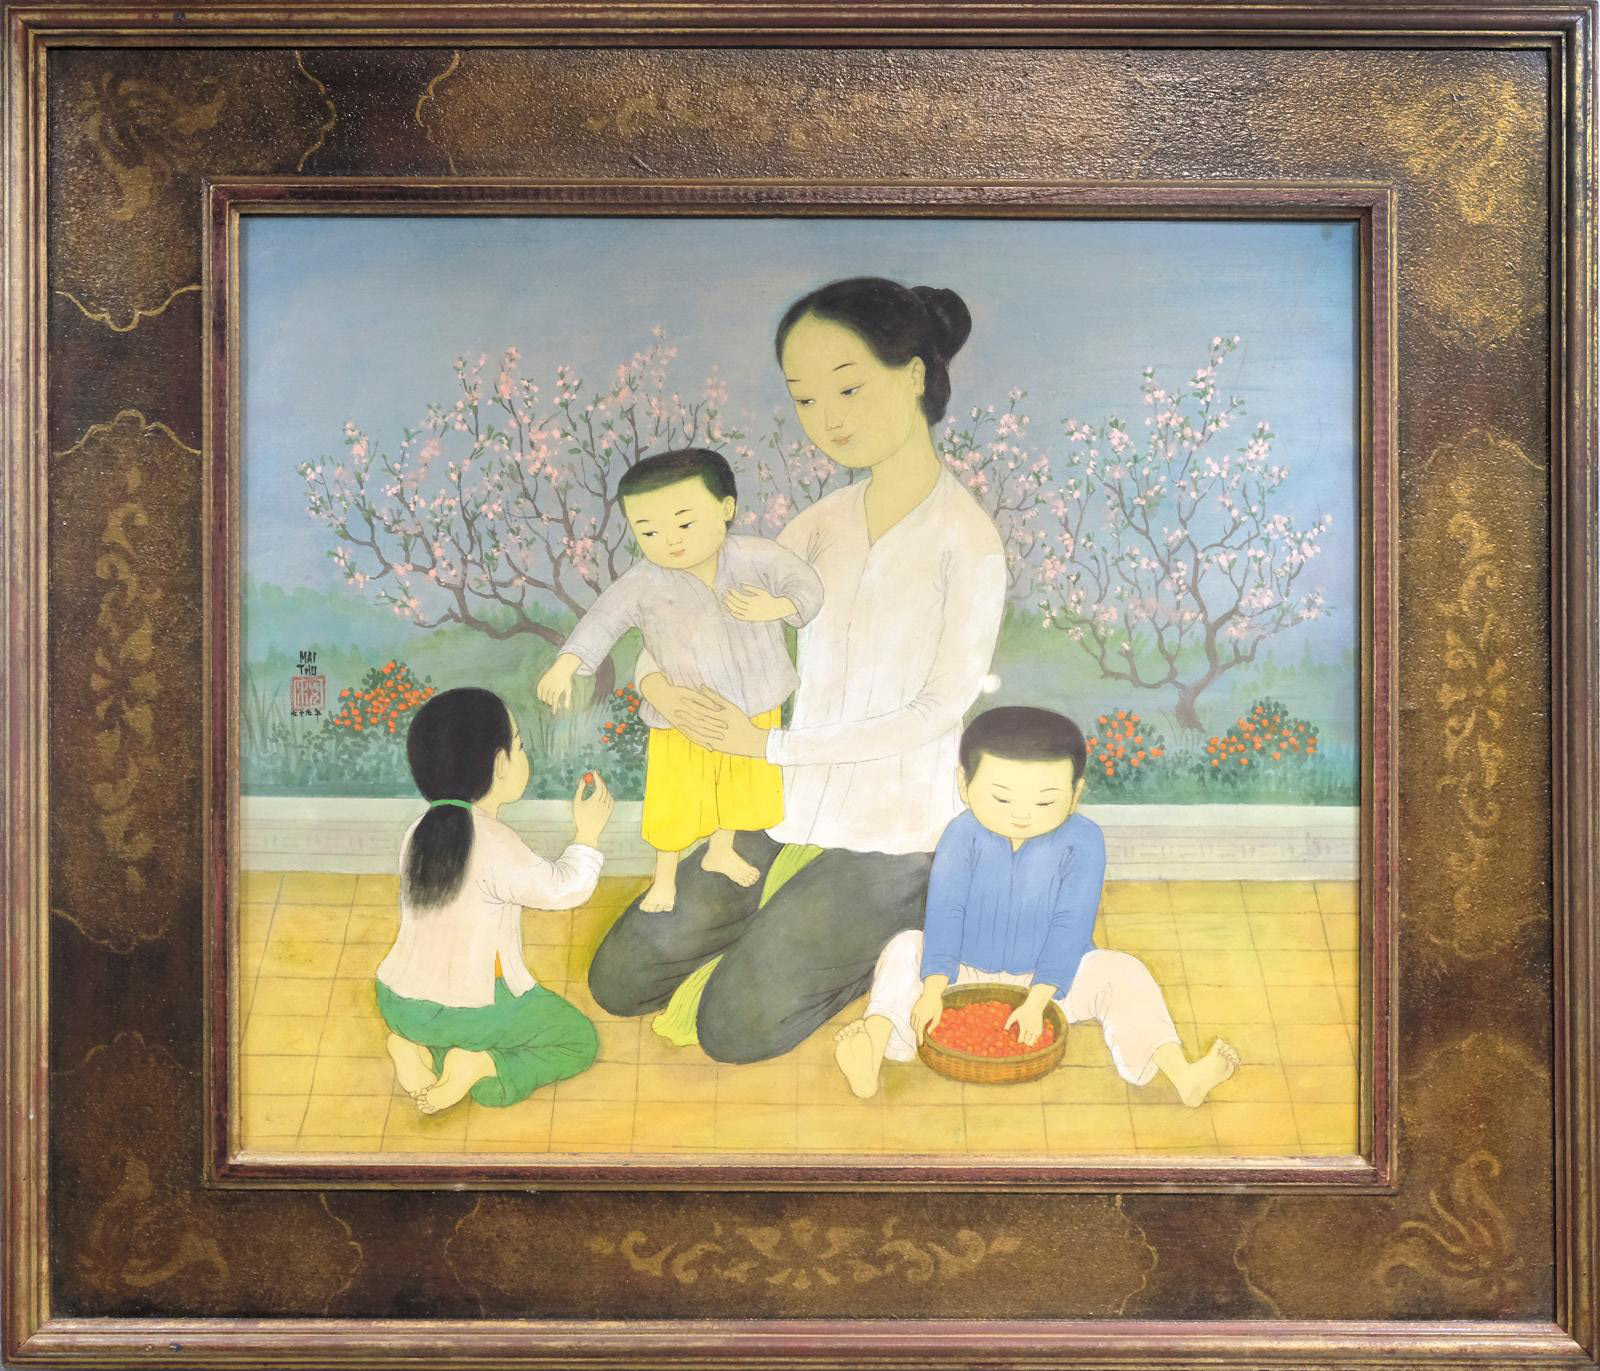 Maternal Love According to Mai-Thu